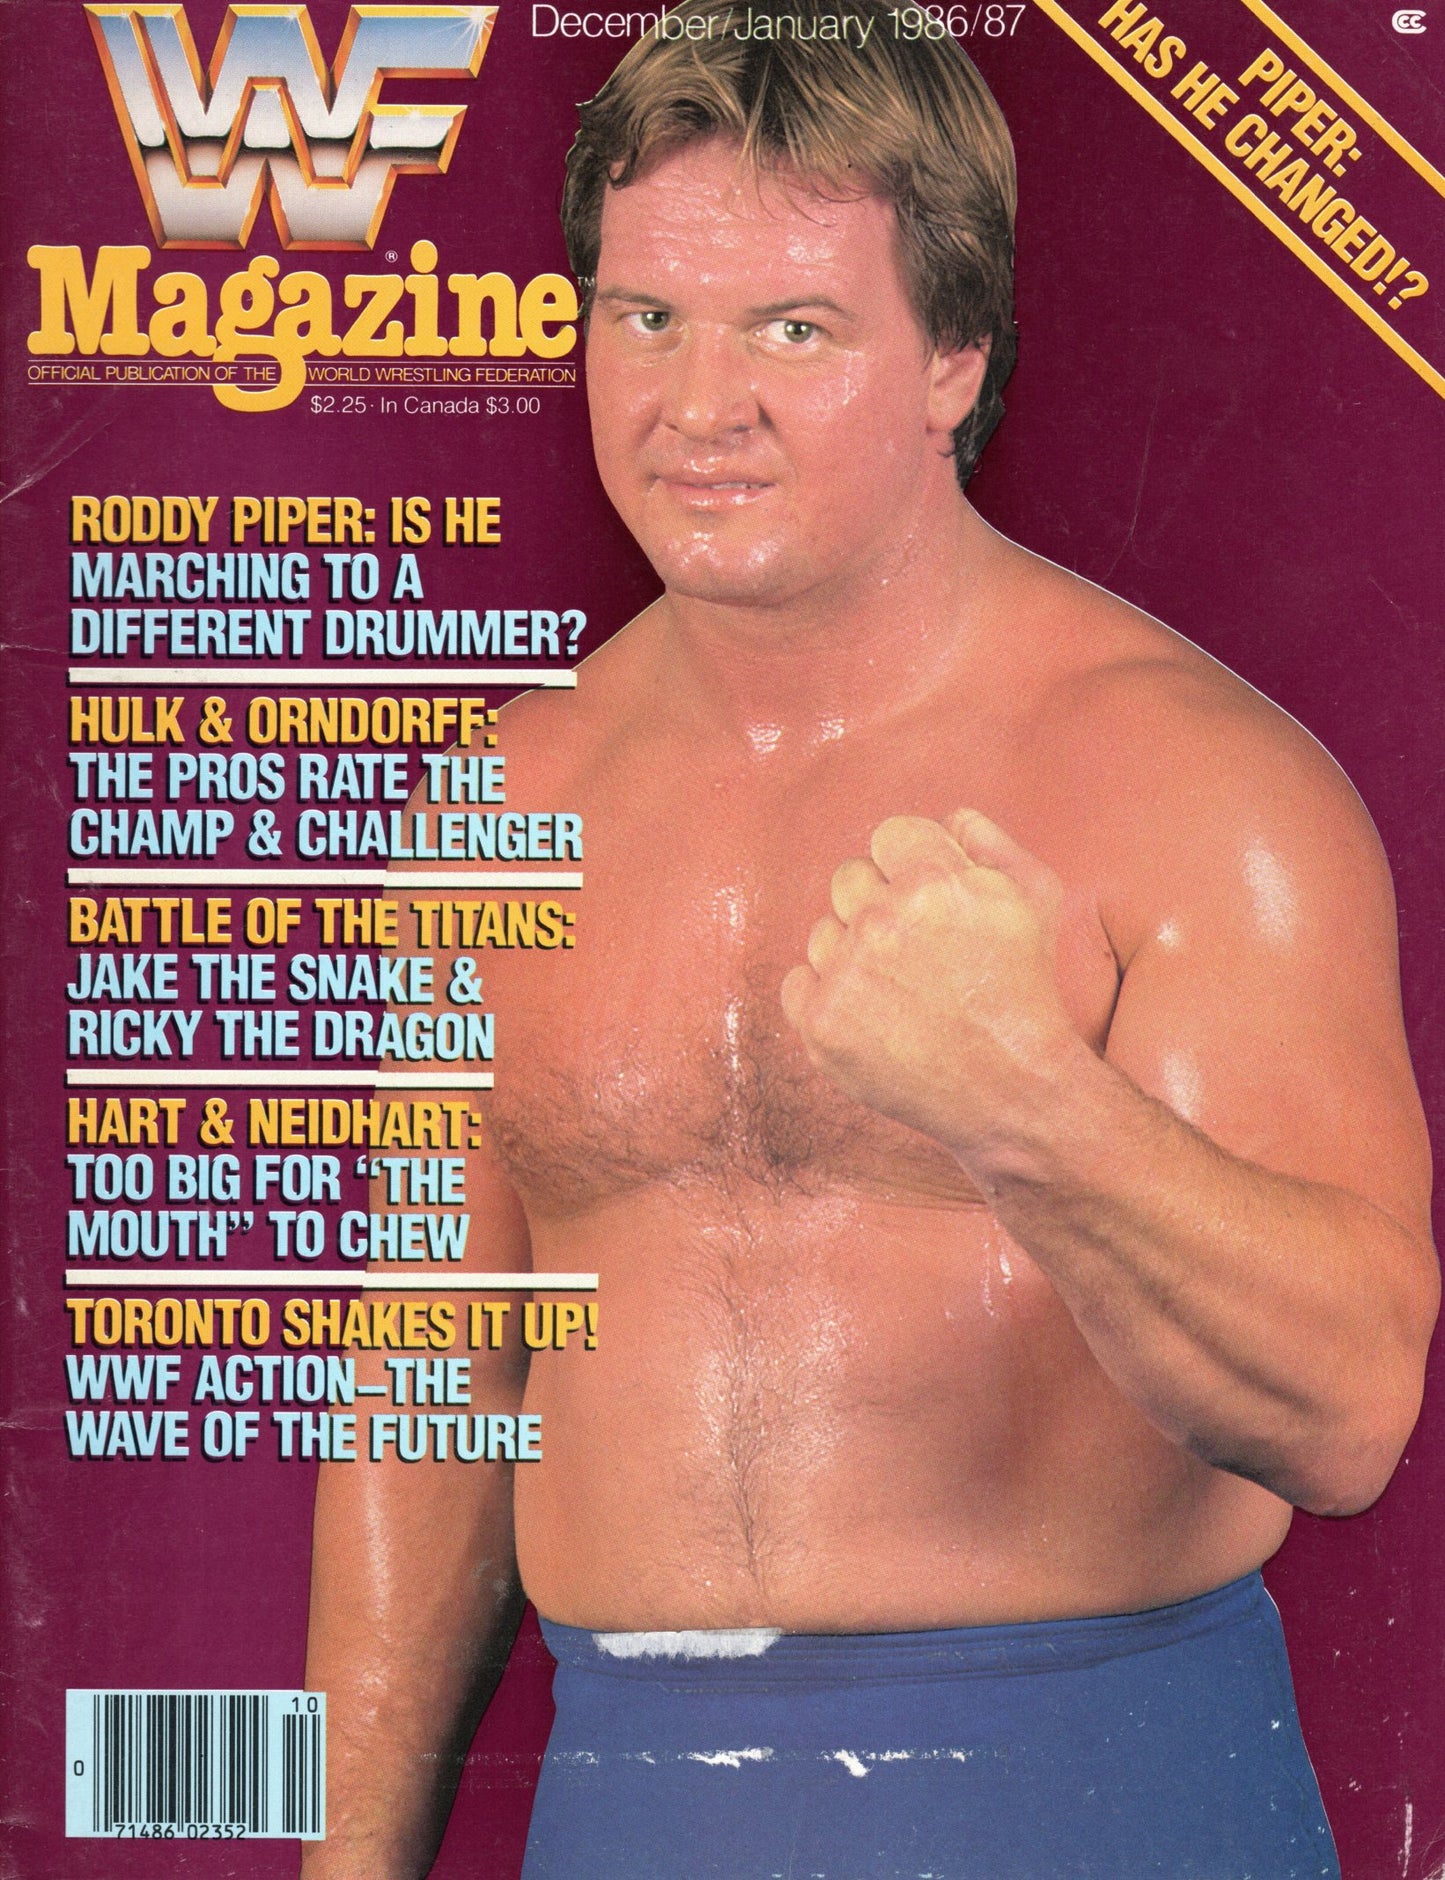 WWF Magazine December/January 1986/87